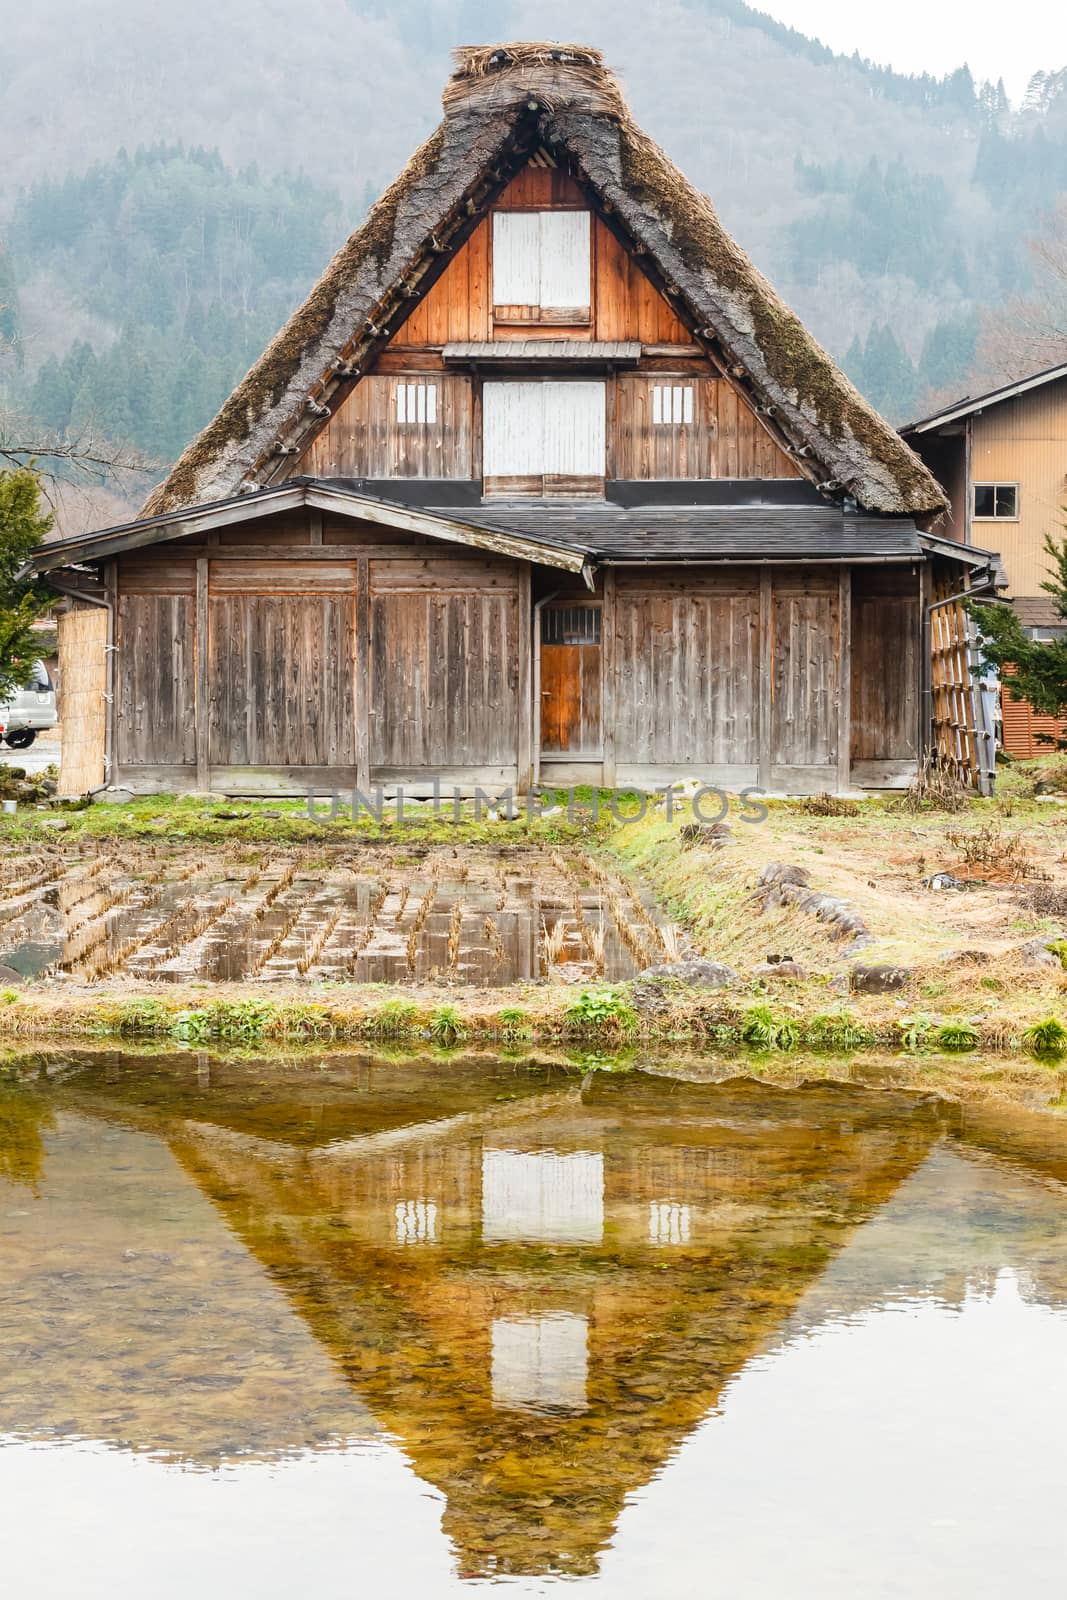 Reflect of house at Shirakawago. by stigmatize